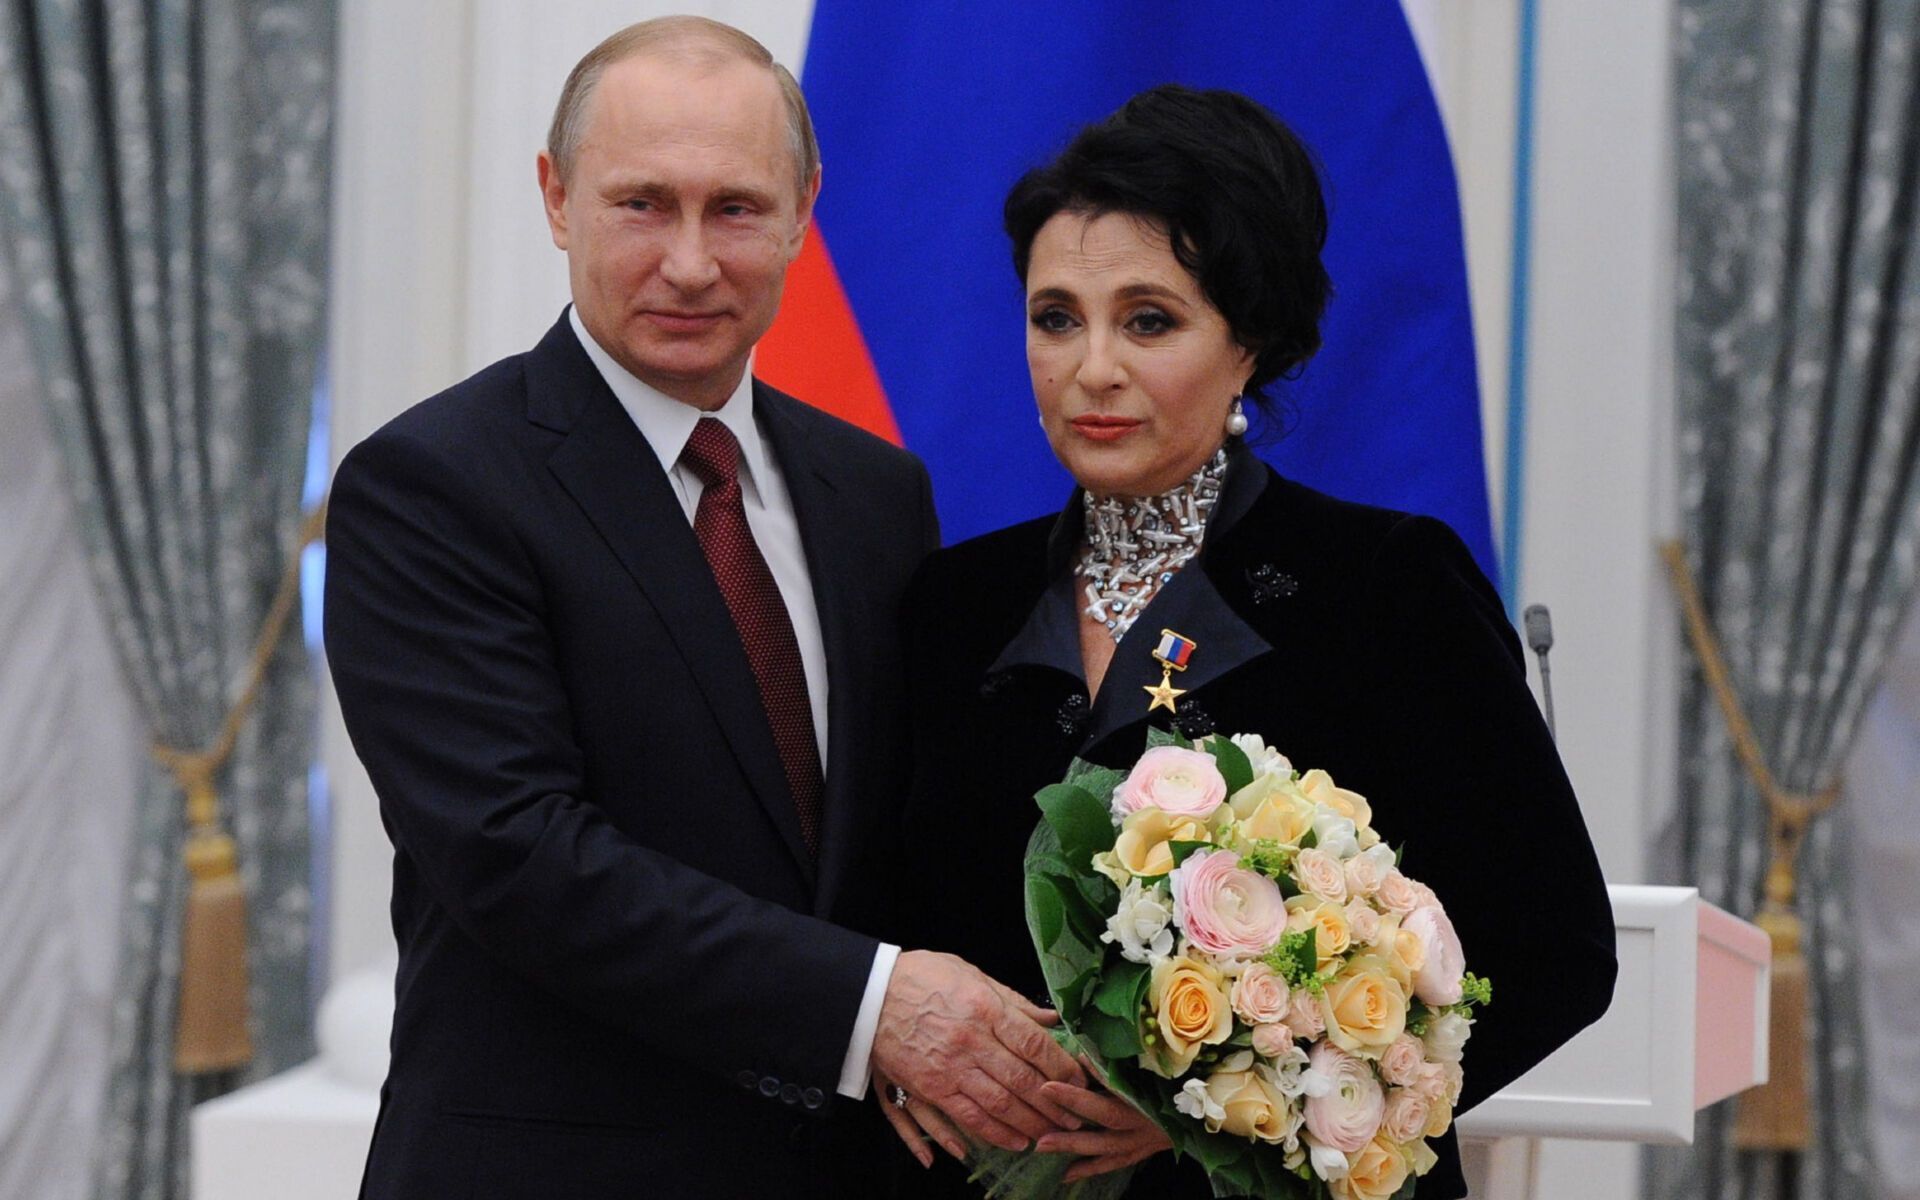 Weiner and Putin